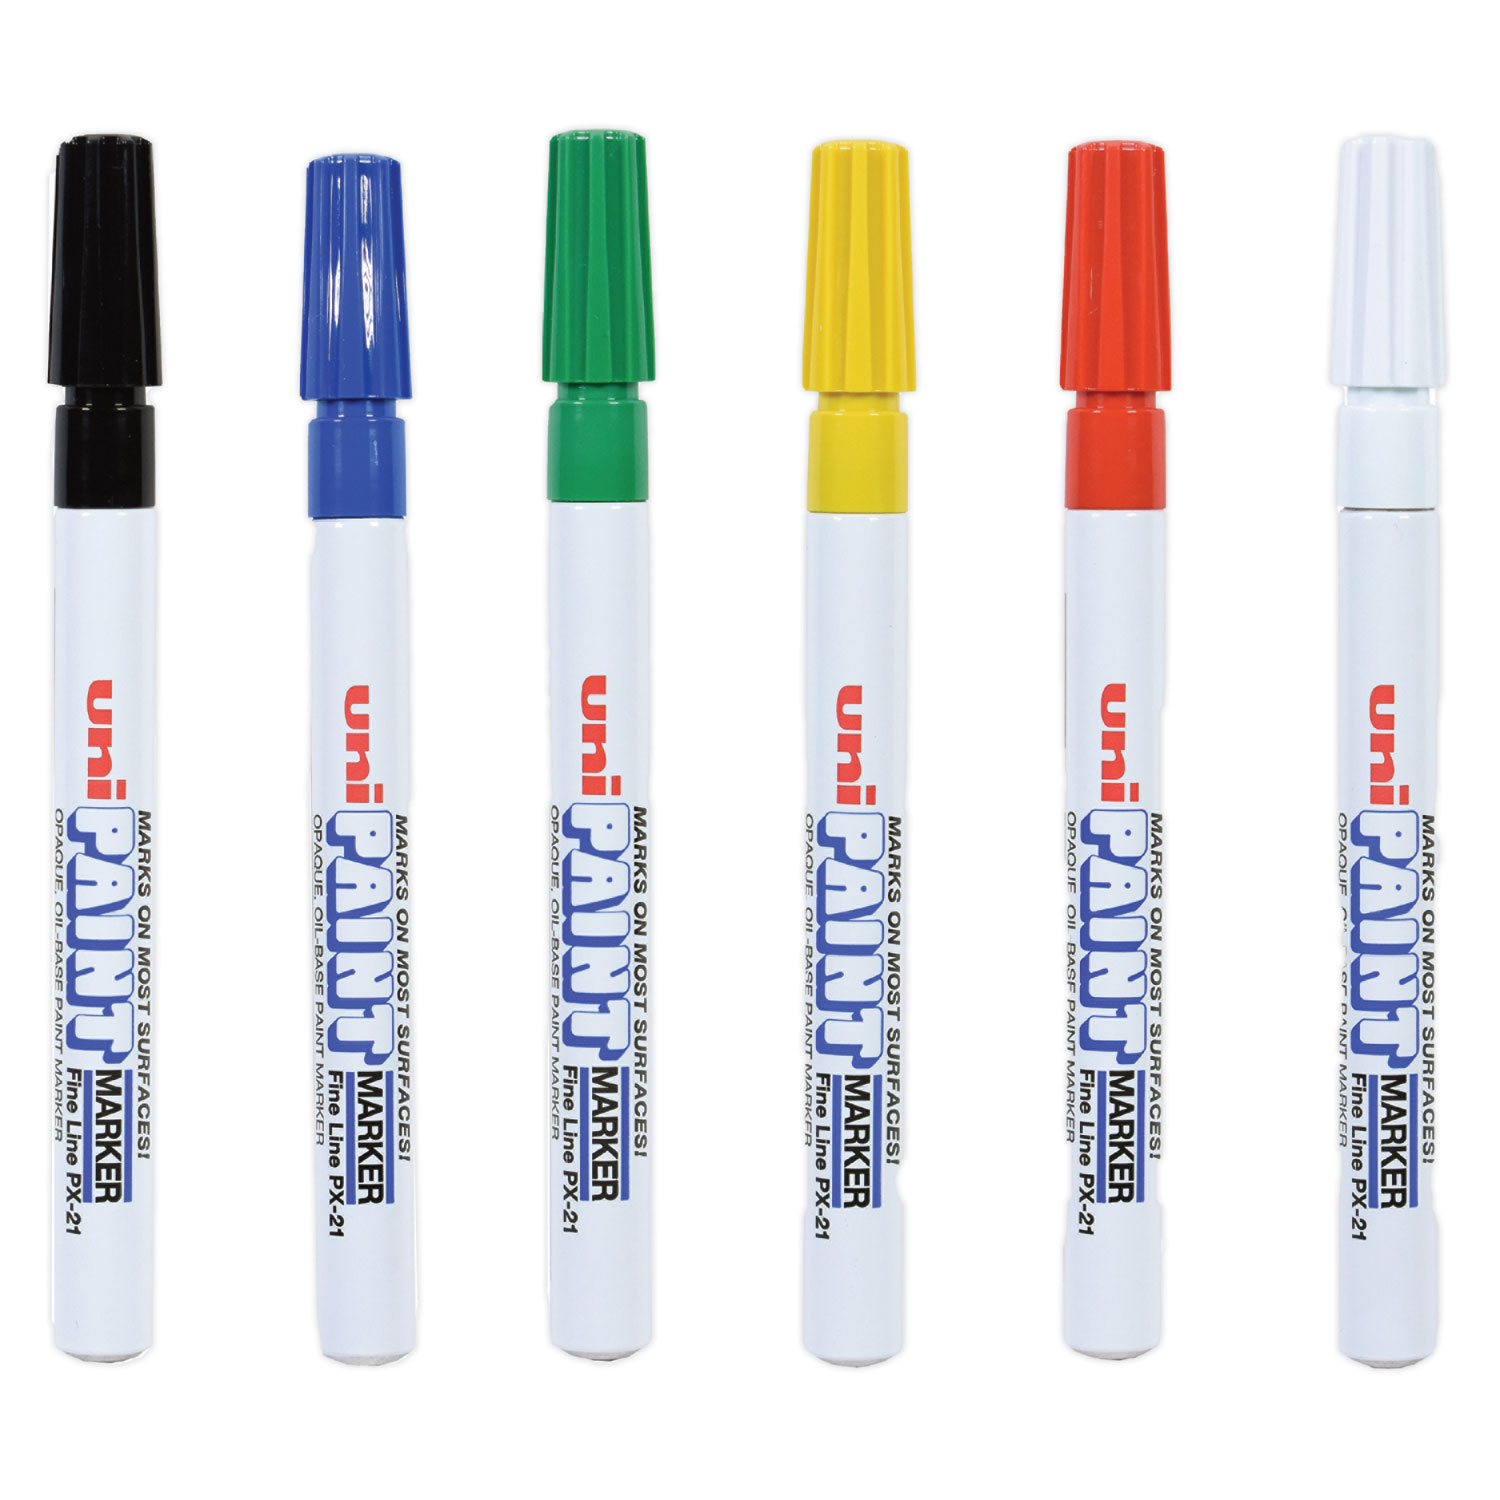 Neon Permanent Markers, Fine Bullet Tip, Assorted Colors, 5/Pack - Zerbee